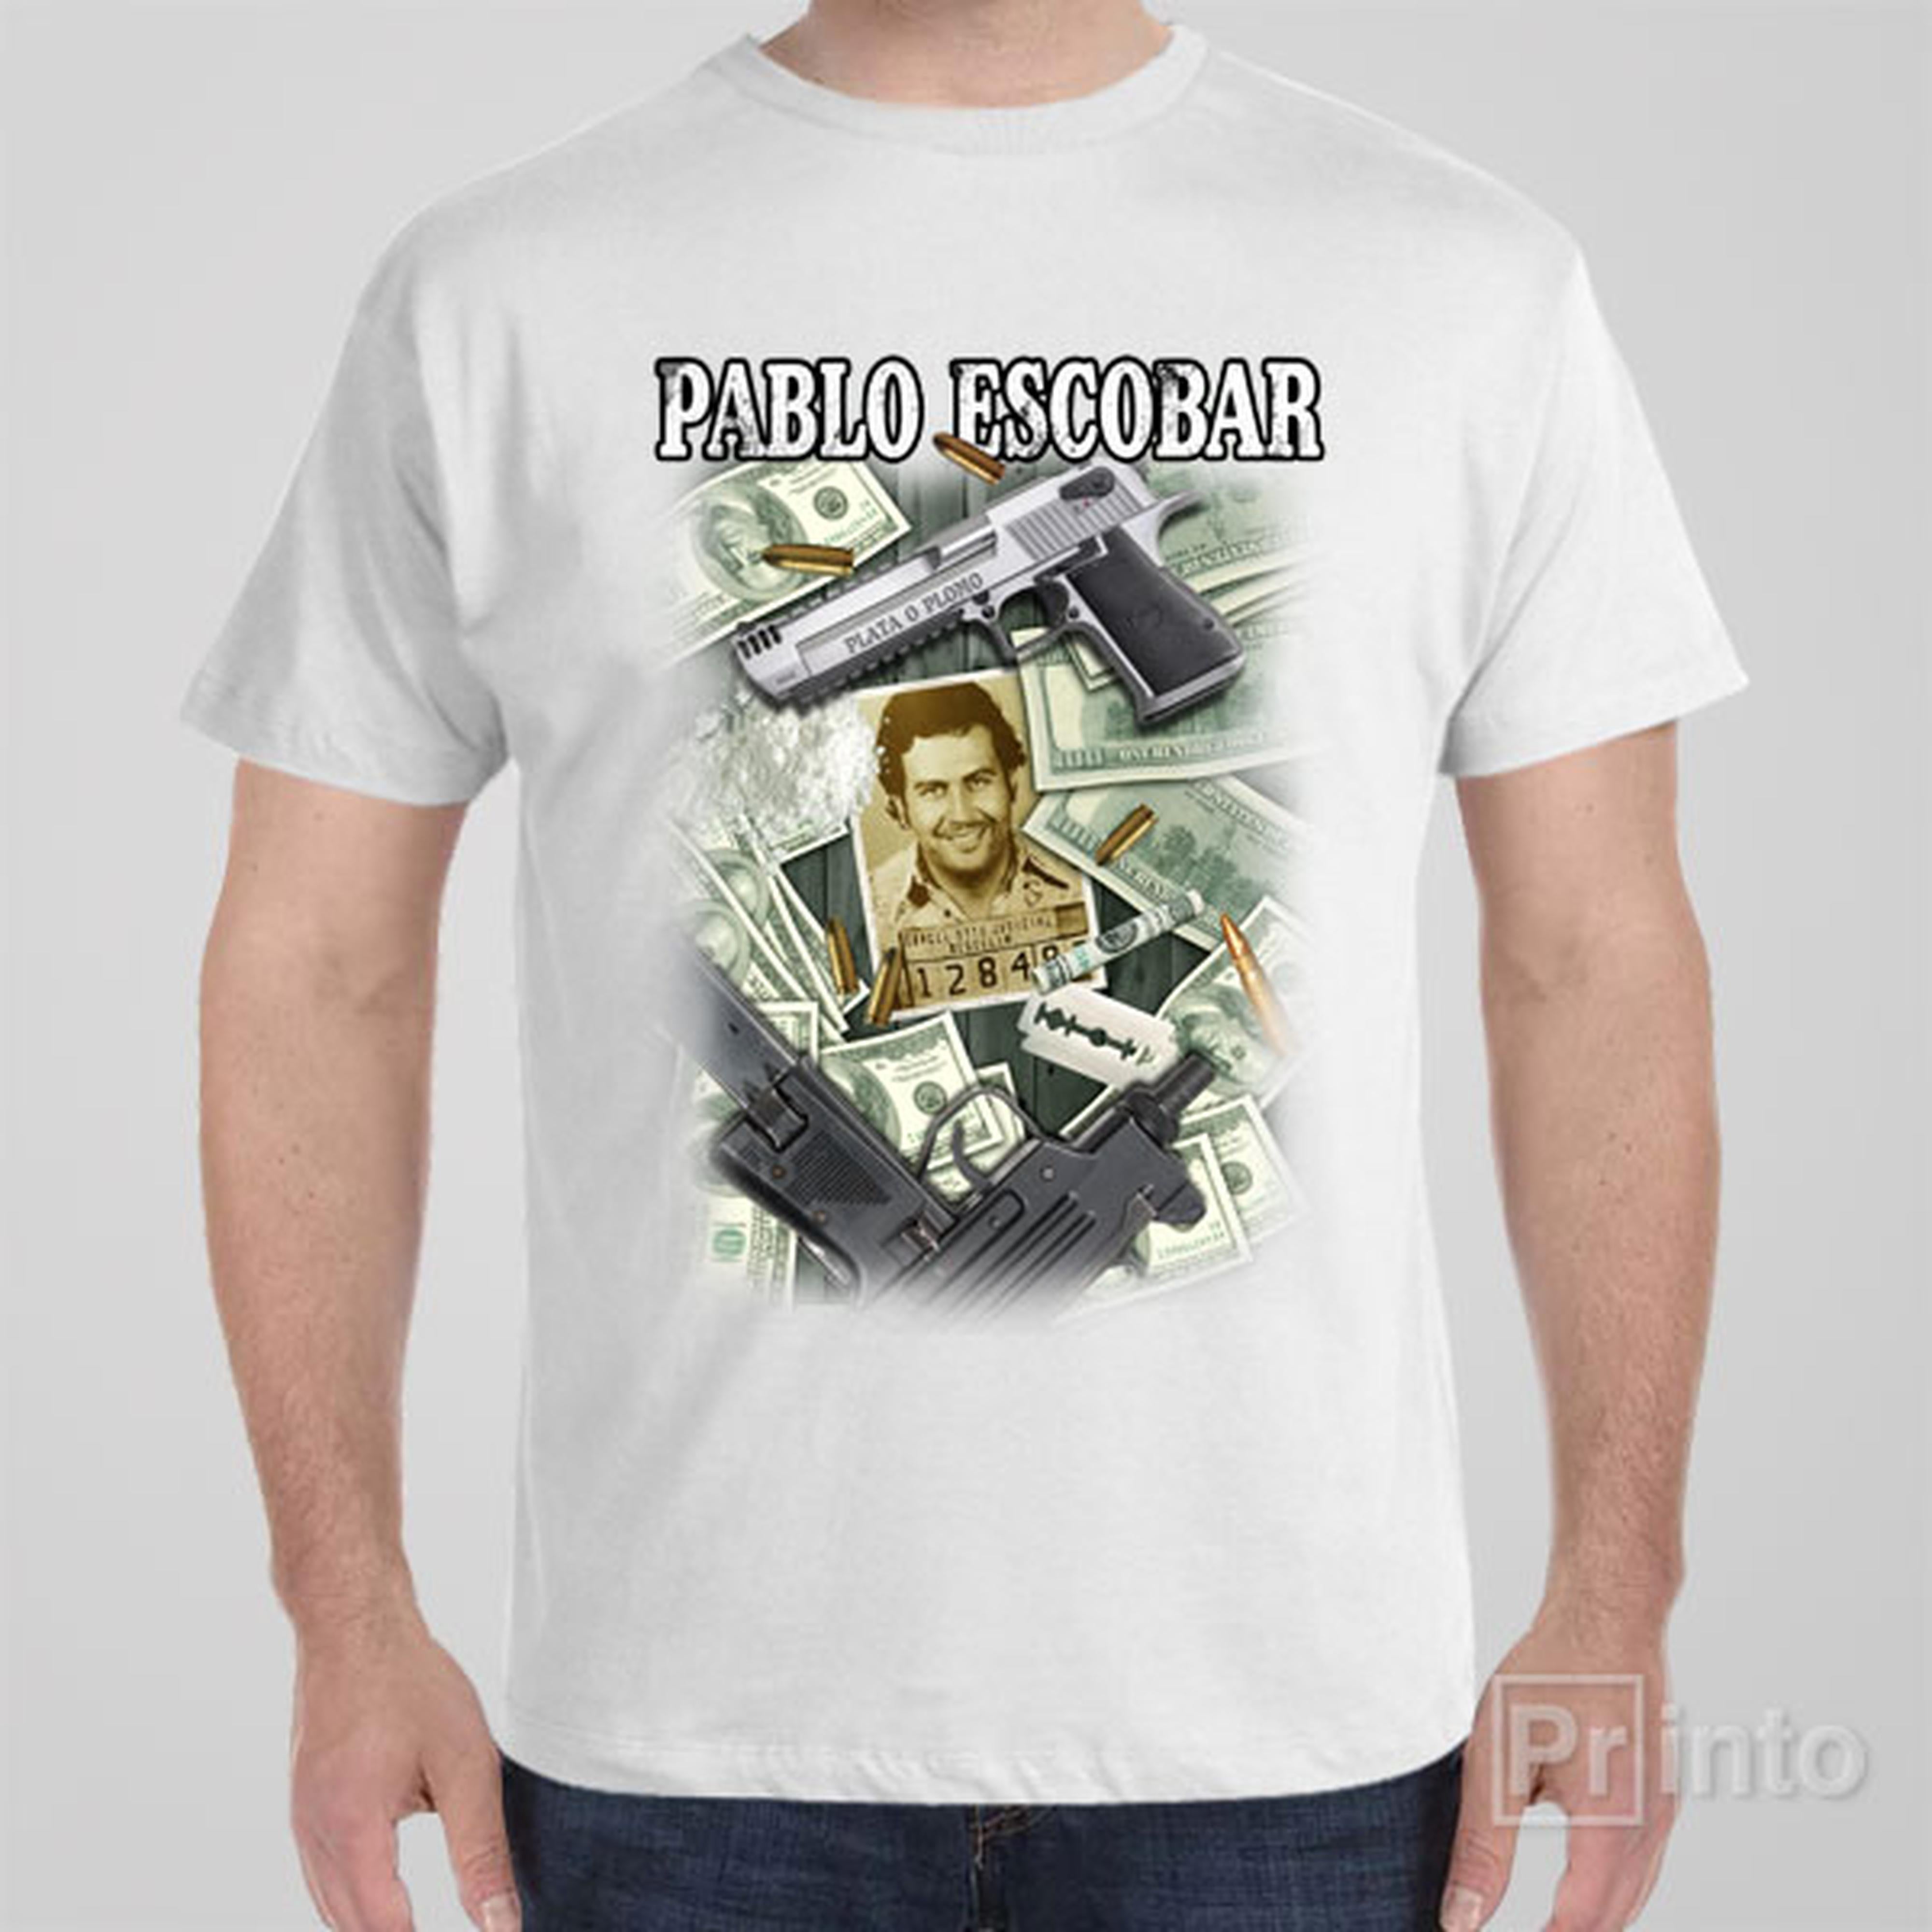 pablo-escobar-collage-t-shirt